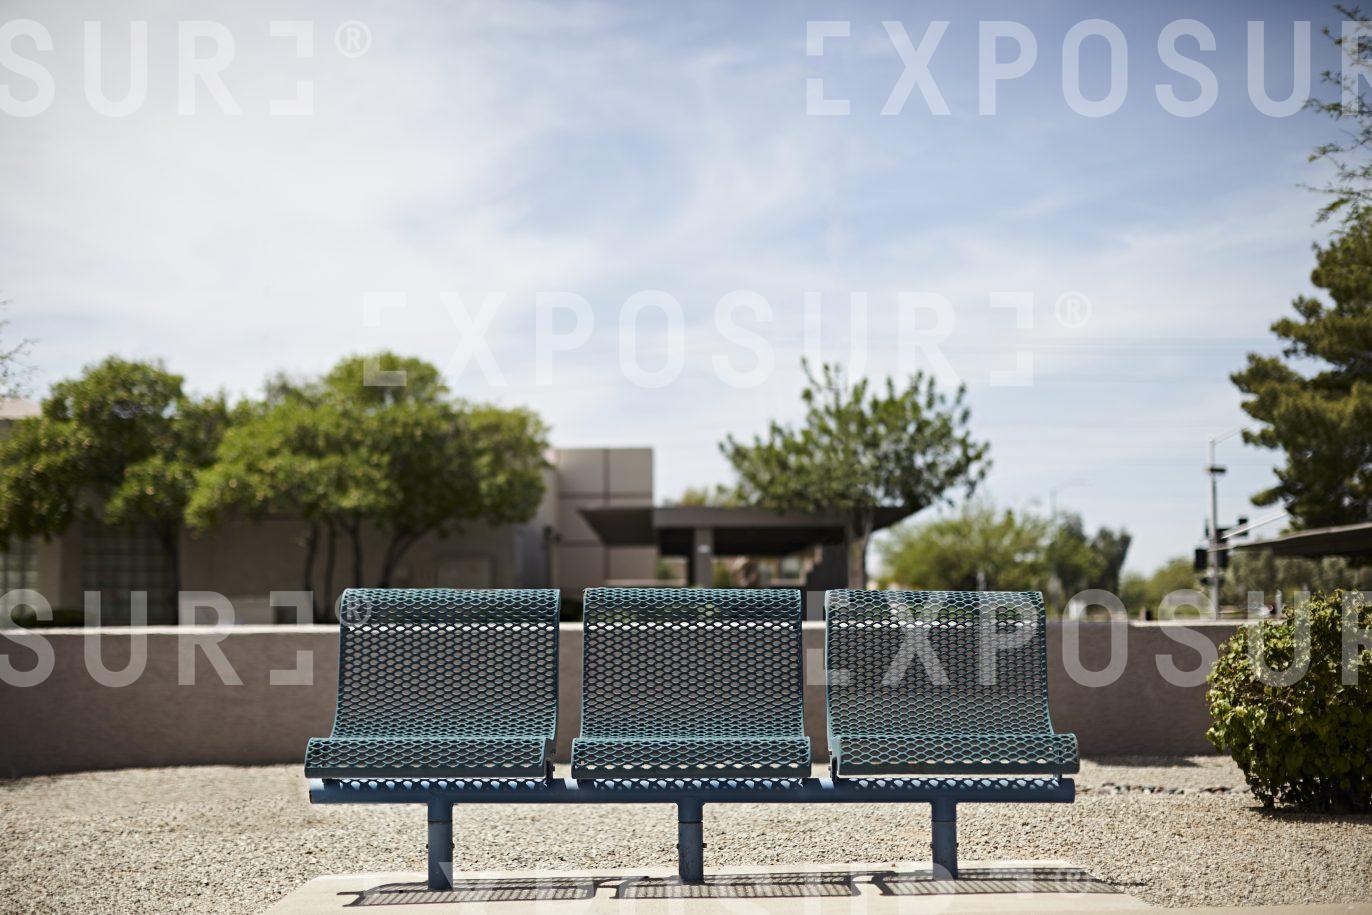 Arizona, green metal bench seats